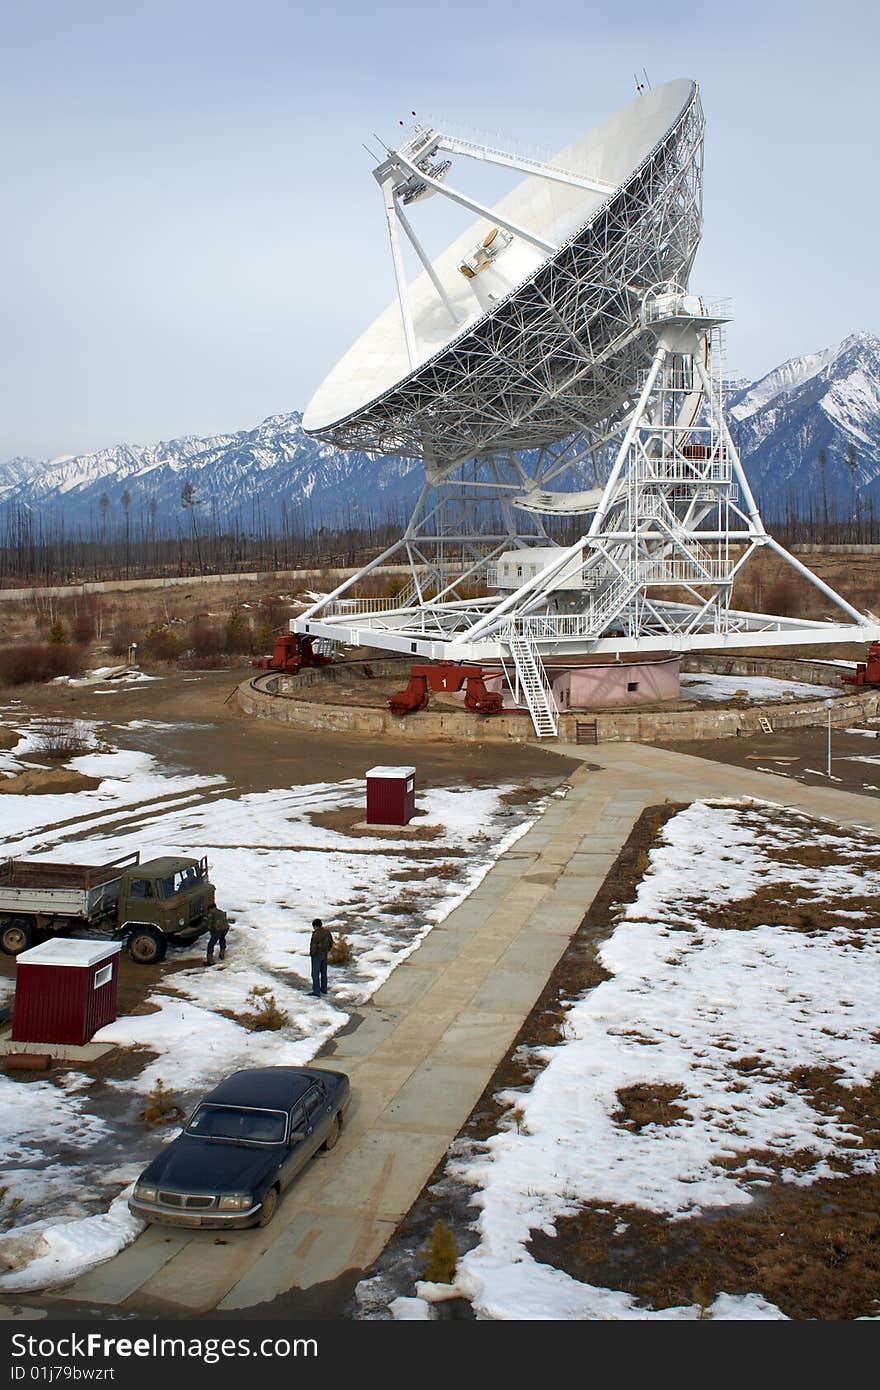 Radio telescope QUASAR New observatory